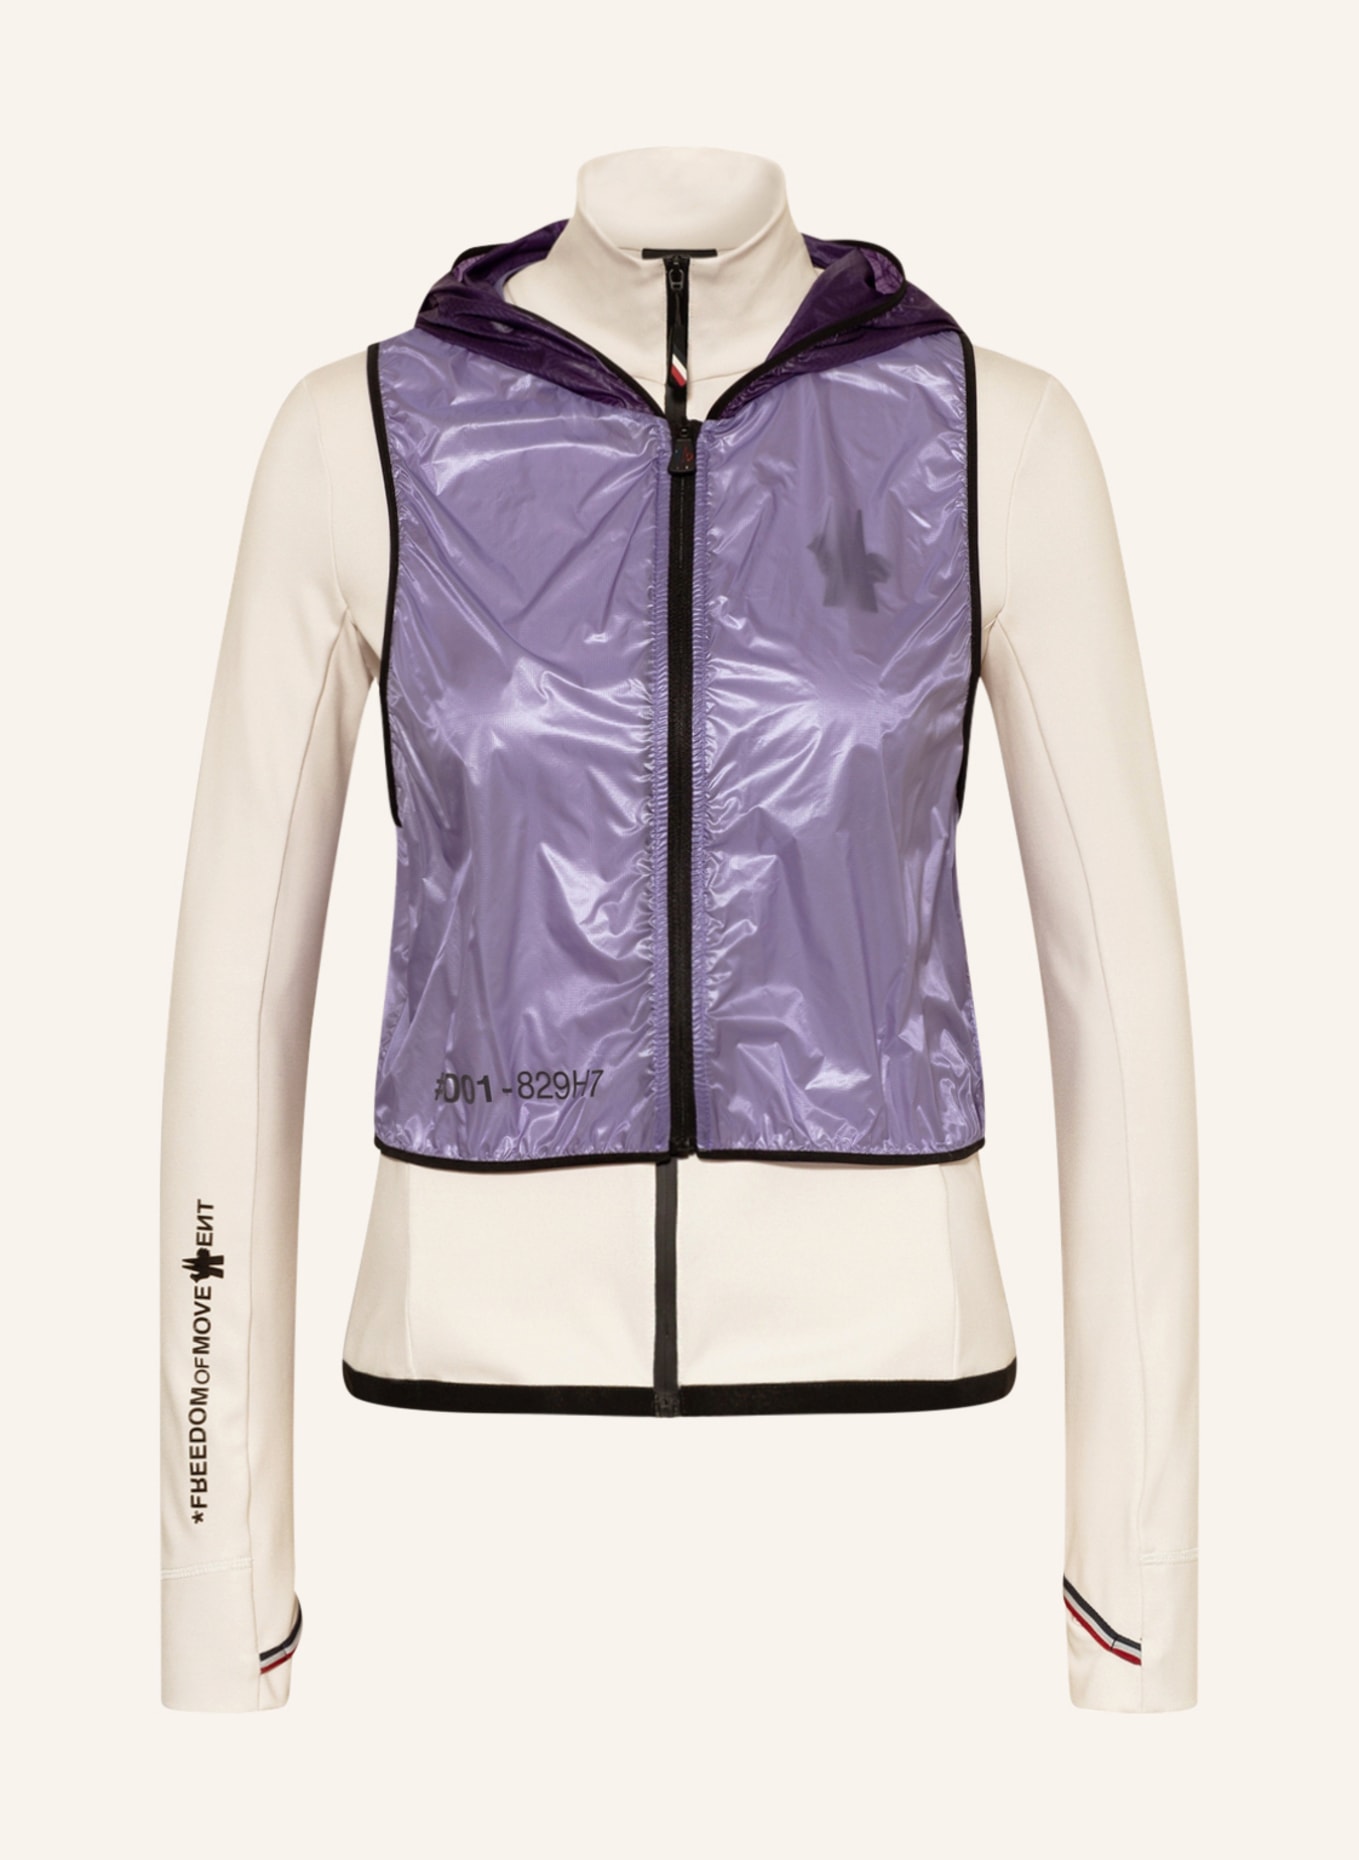 MONCLER GRENOBLE Jacke mit abnehmbarer Weste, Farbe: CREME/ LILA (Bild 1)